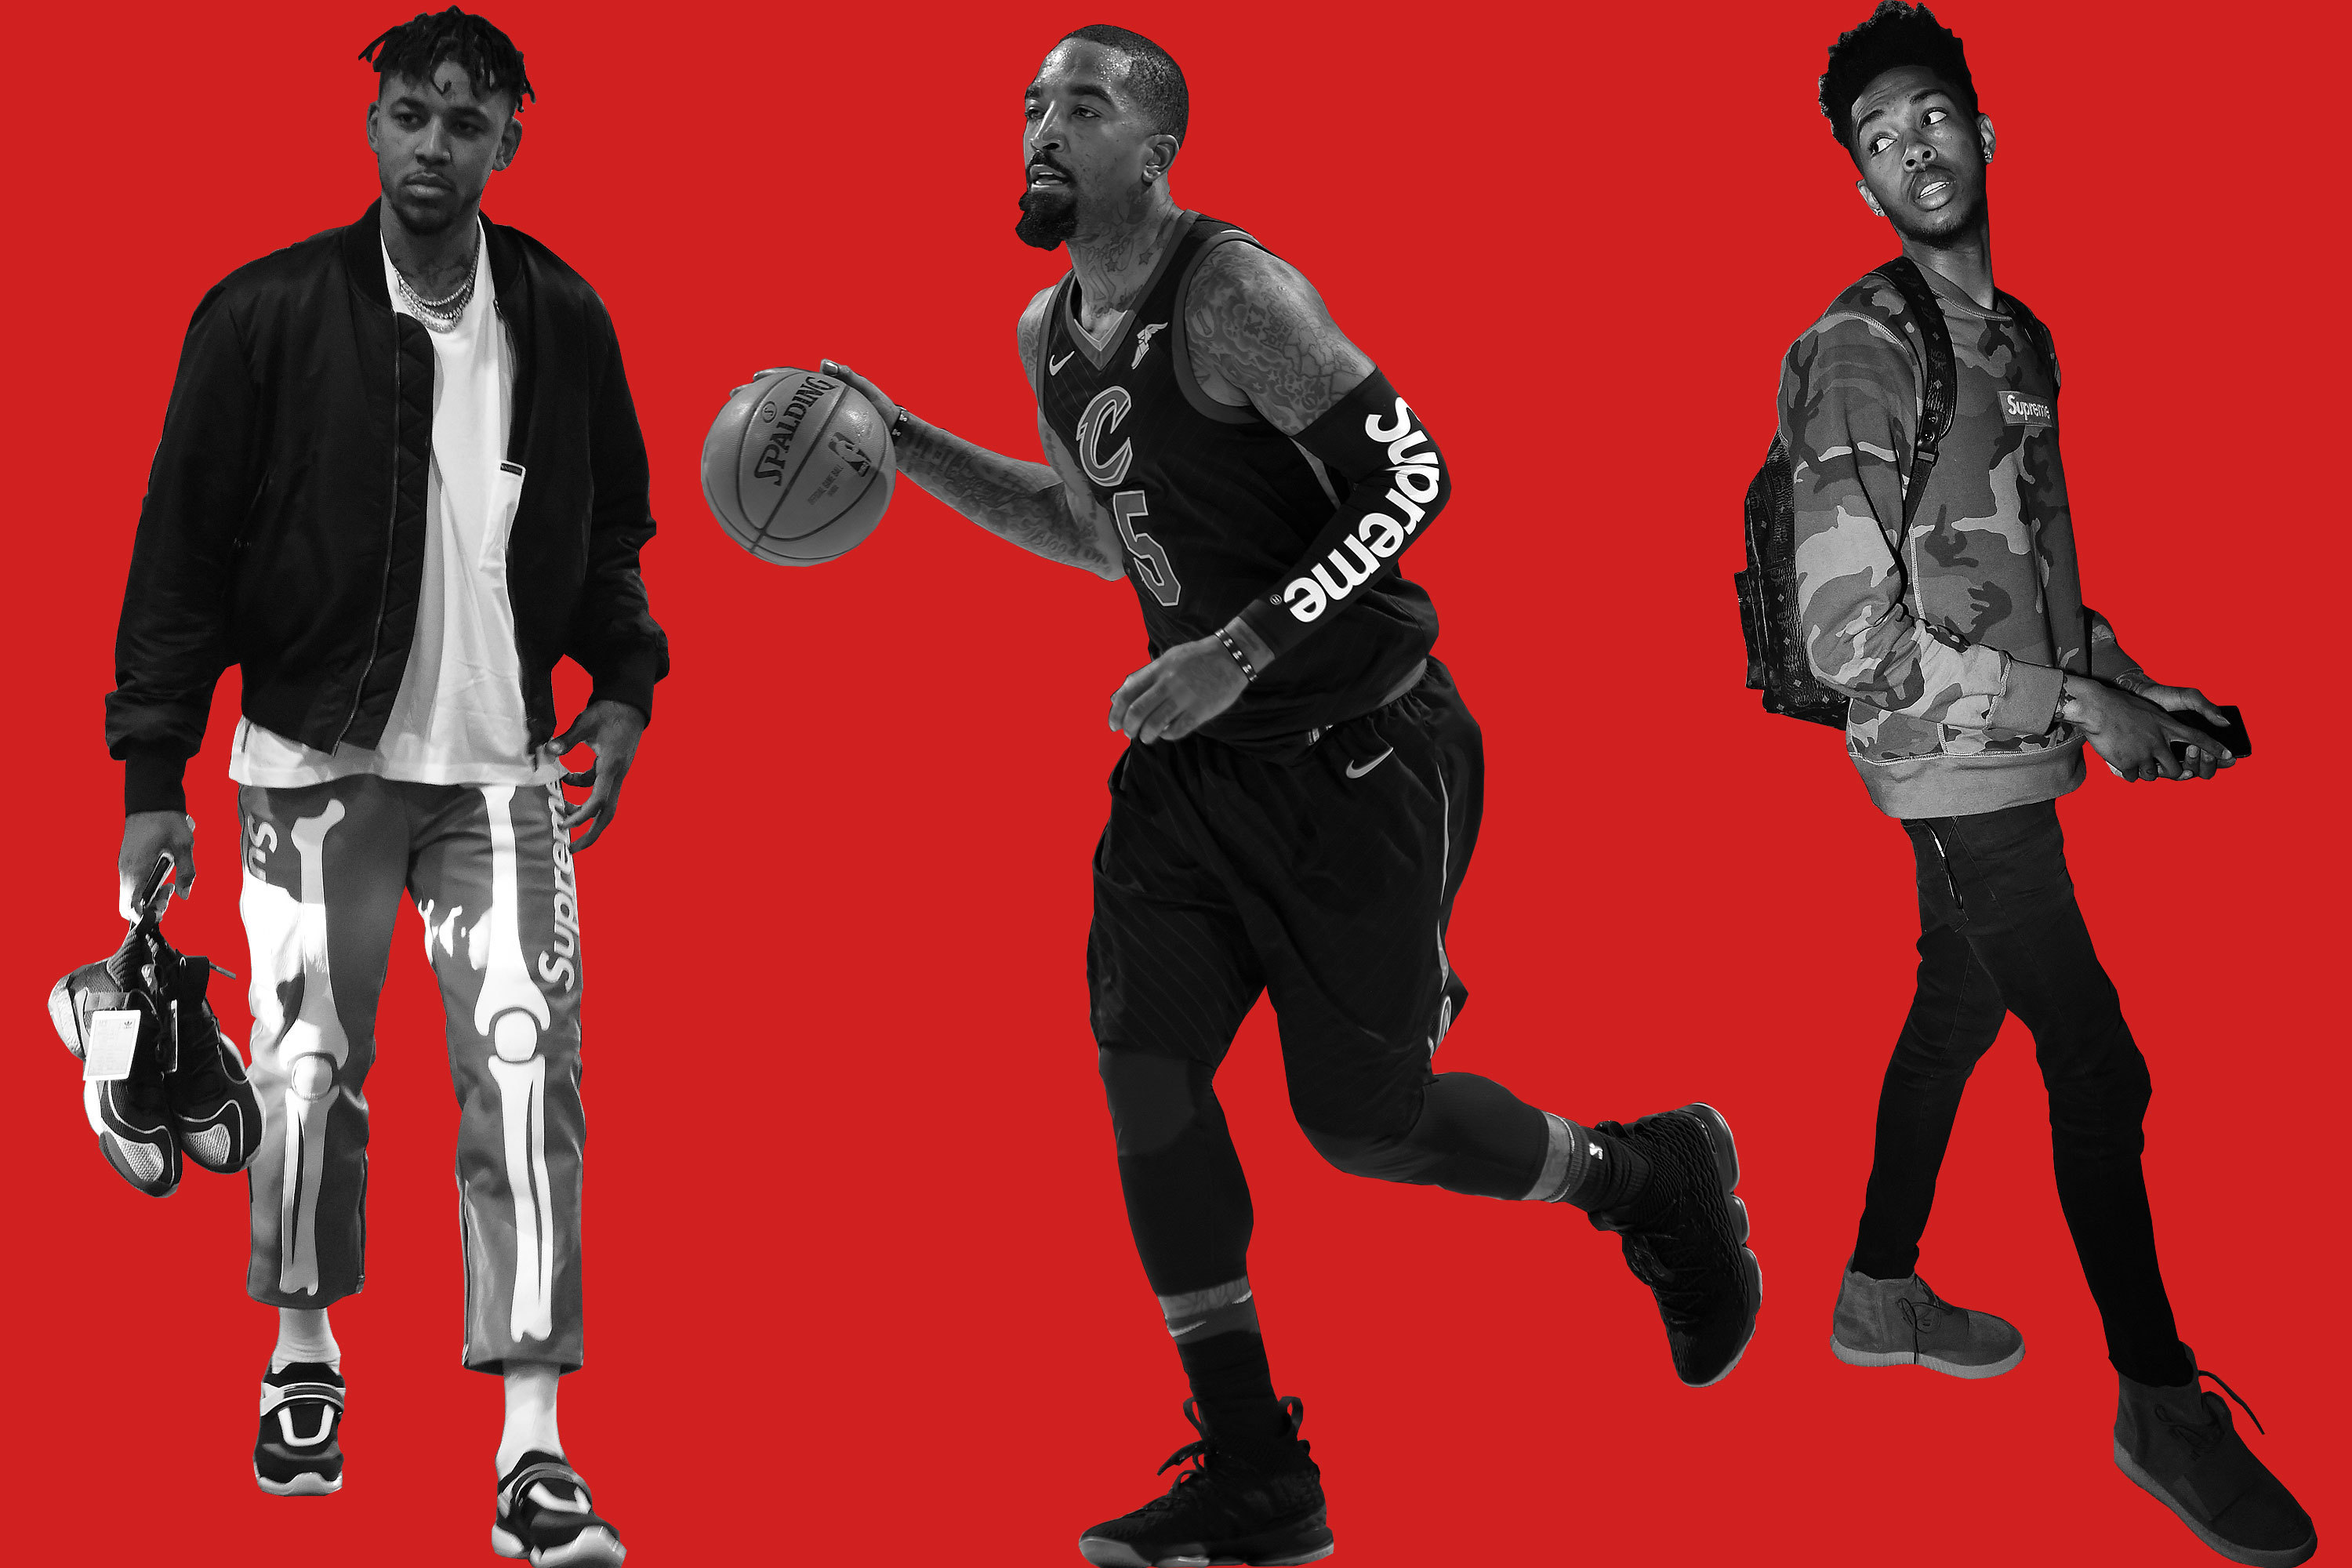 J.R. Smith Wears the Black Supreme x NBA Shooting Sleeve Against